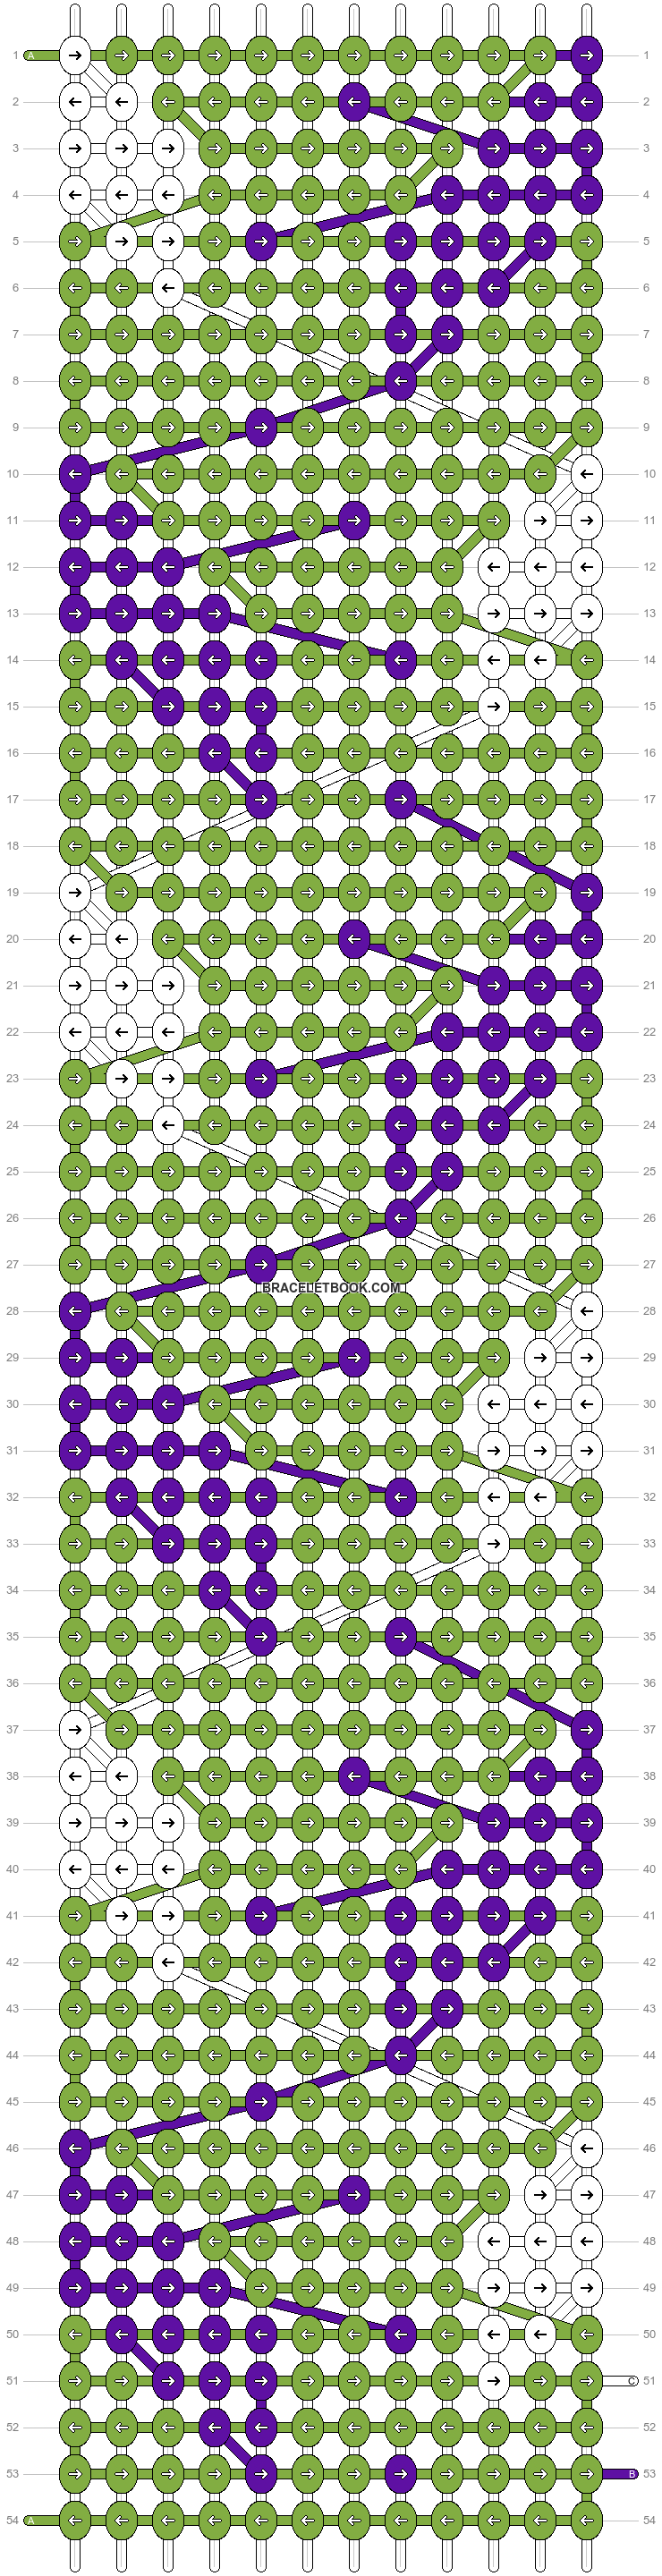 Alpha pattern #27246 variation #11234 pattern